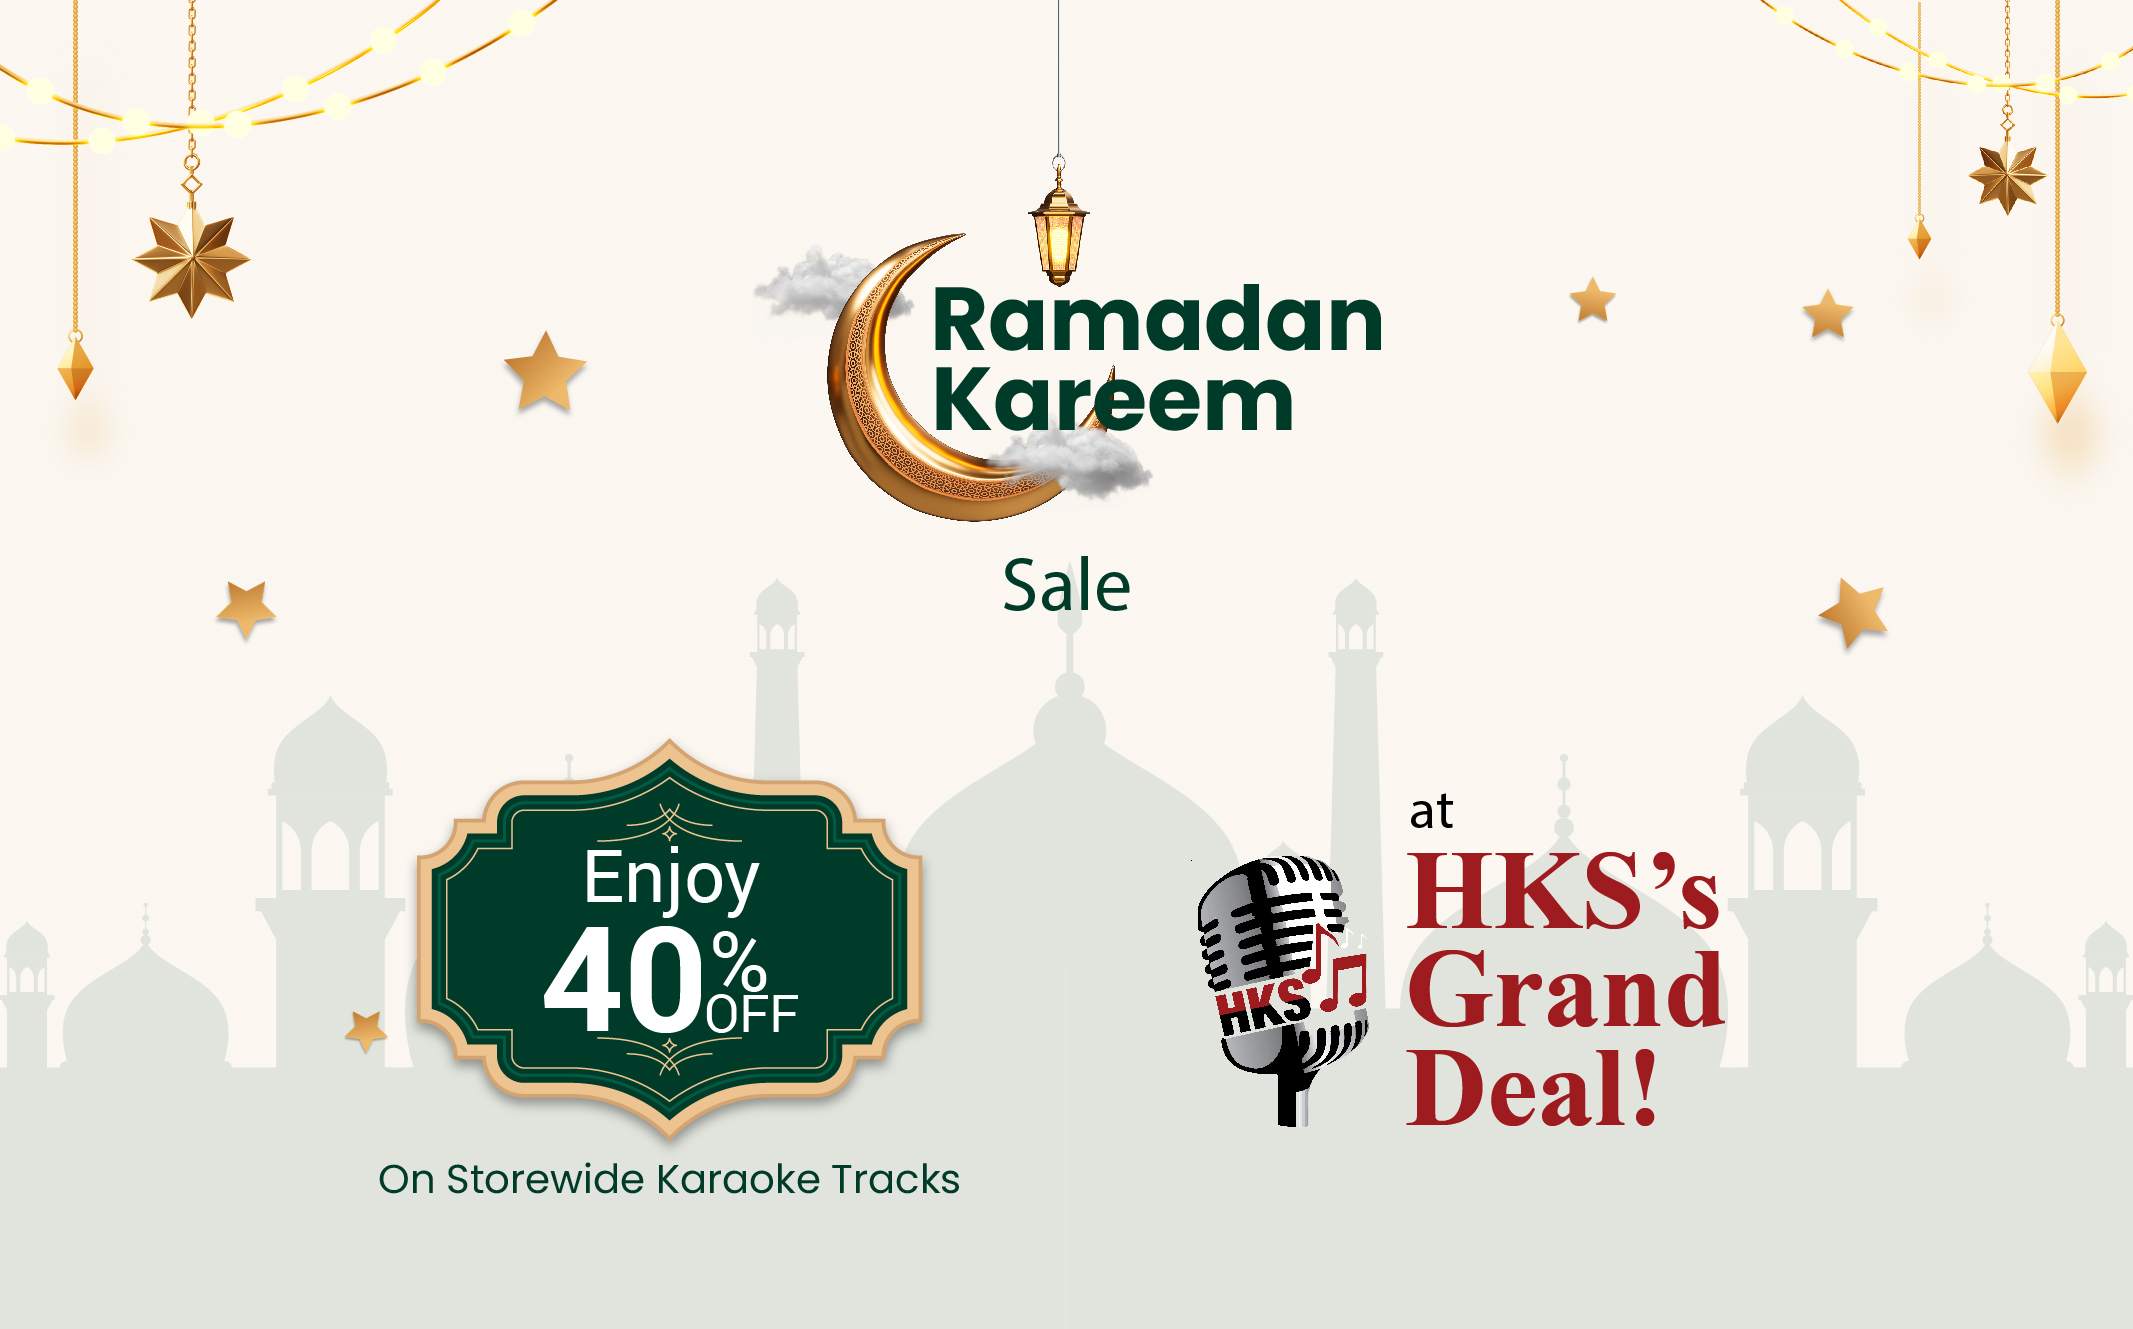 Ramadan Kareem Sale: Enjoy 40% OFF Store-Wide Karaoke Tracks at HKS's Grand Deal!